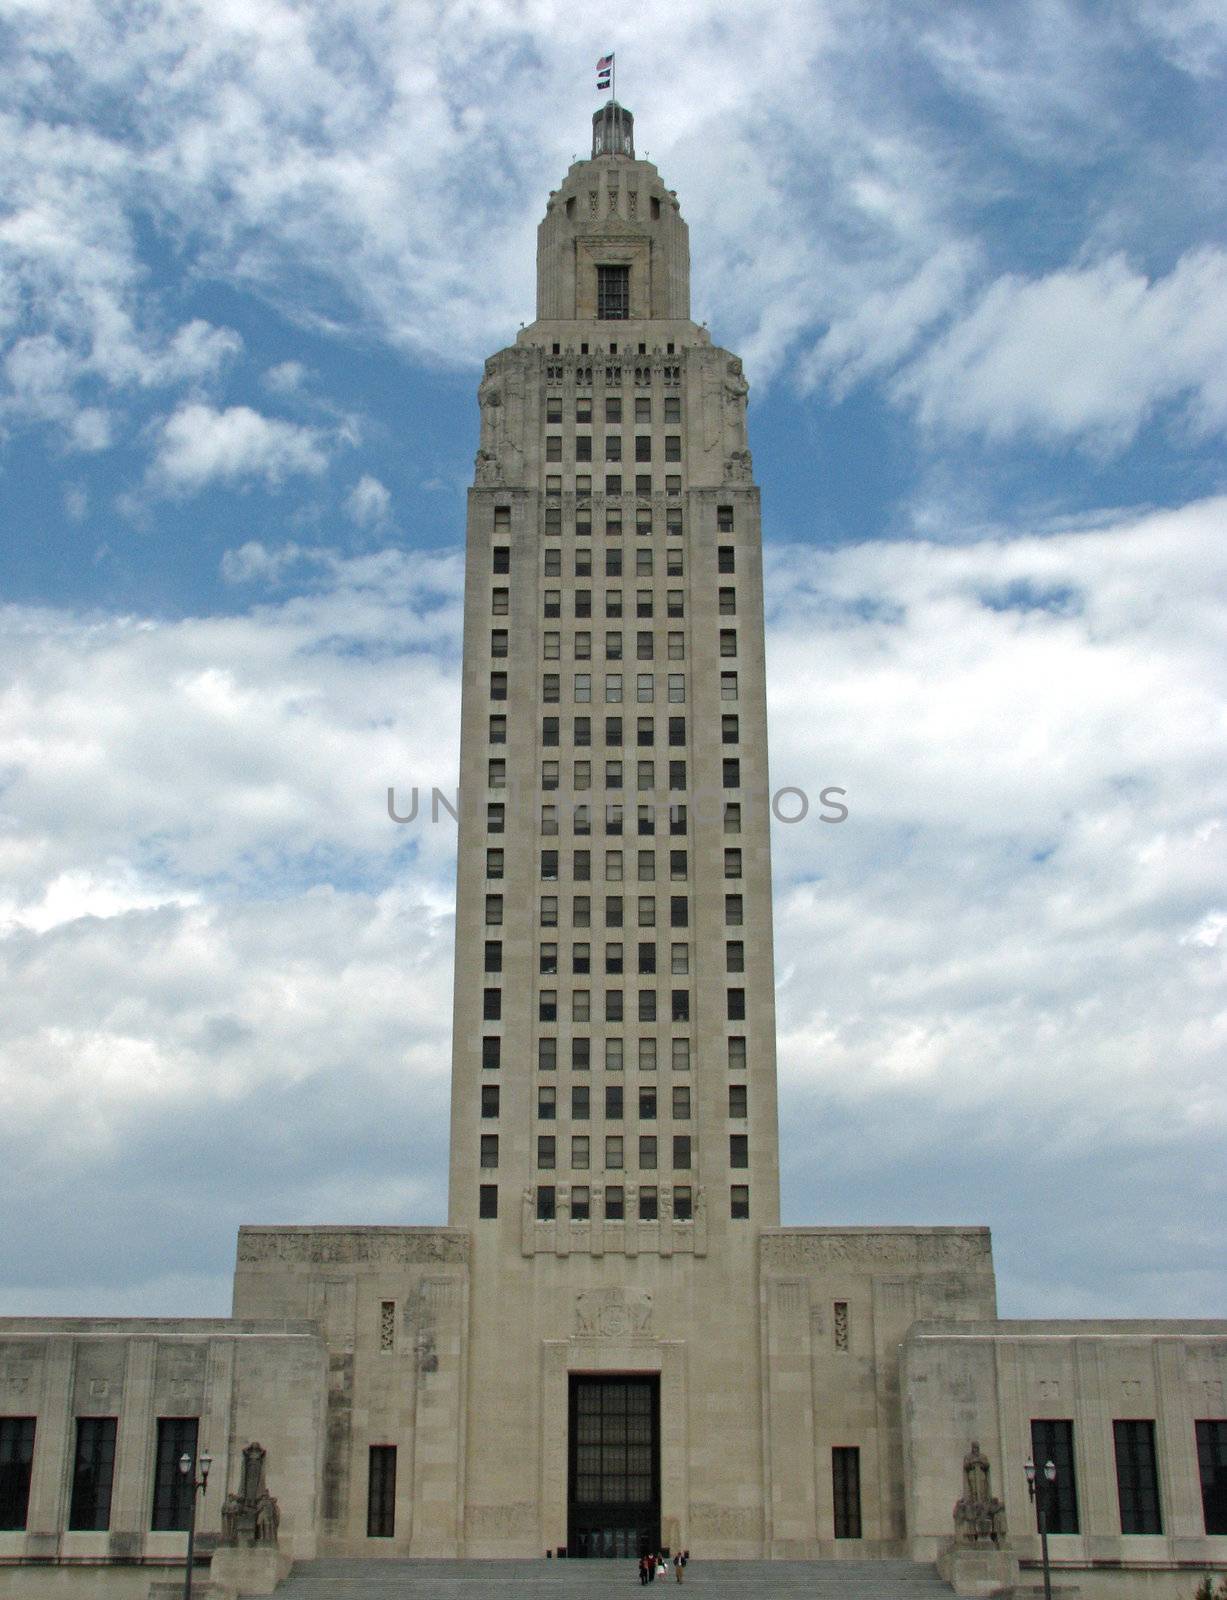 Louisiana, USA Capital Building by bellafotosolo